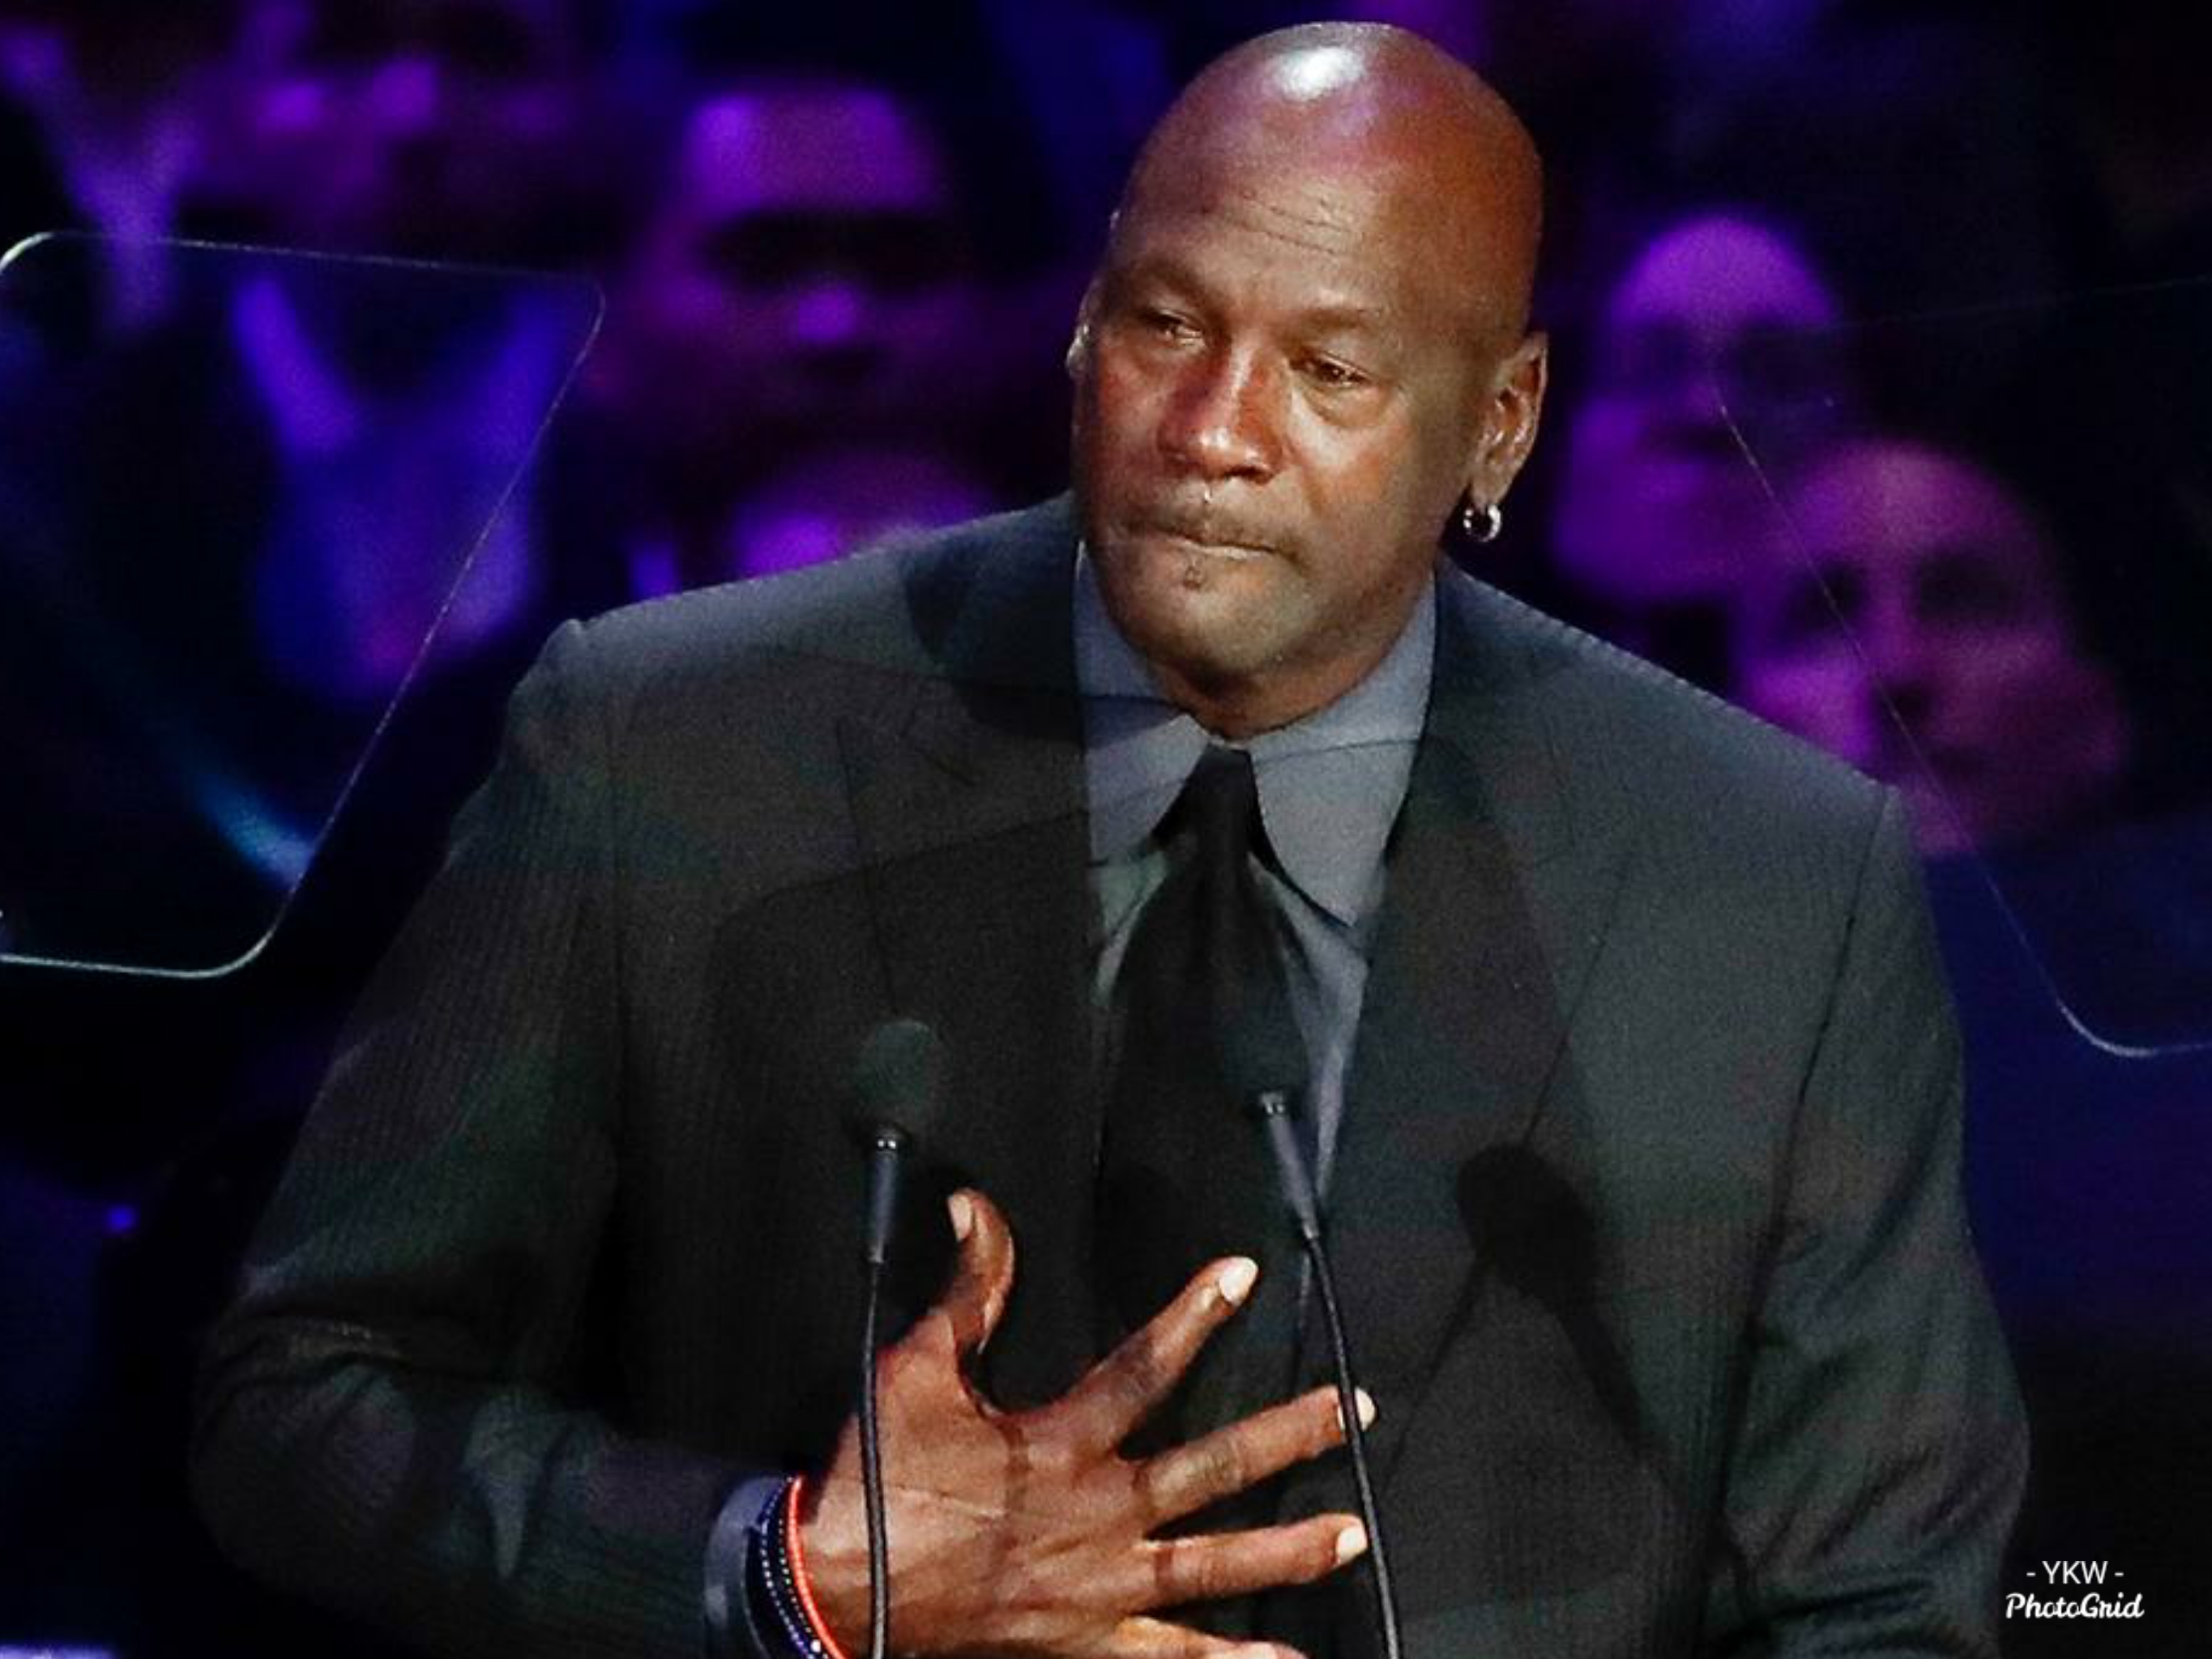 Michael Jordan Pledges $100 Million In Support Of Social Justice